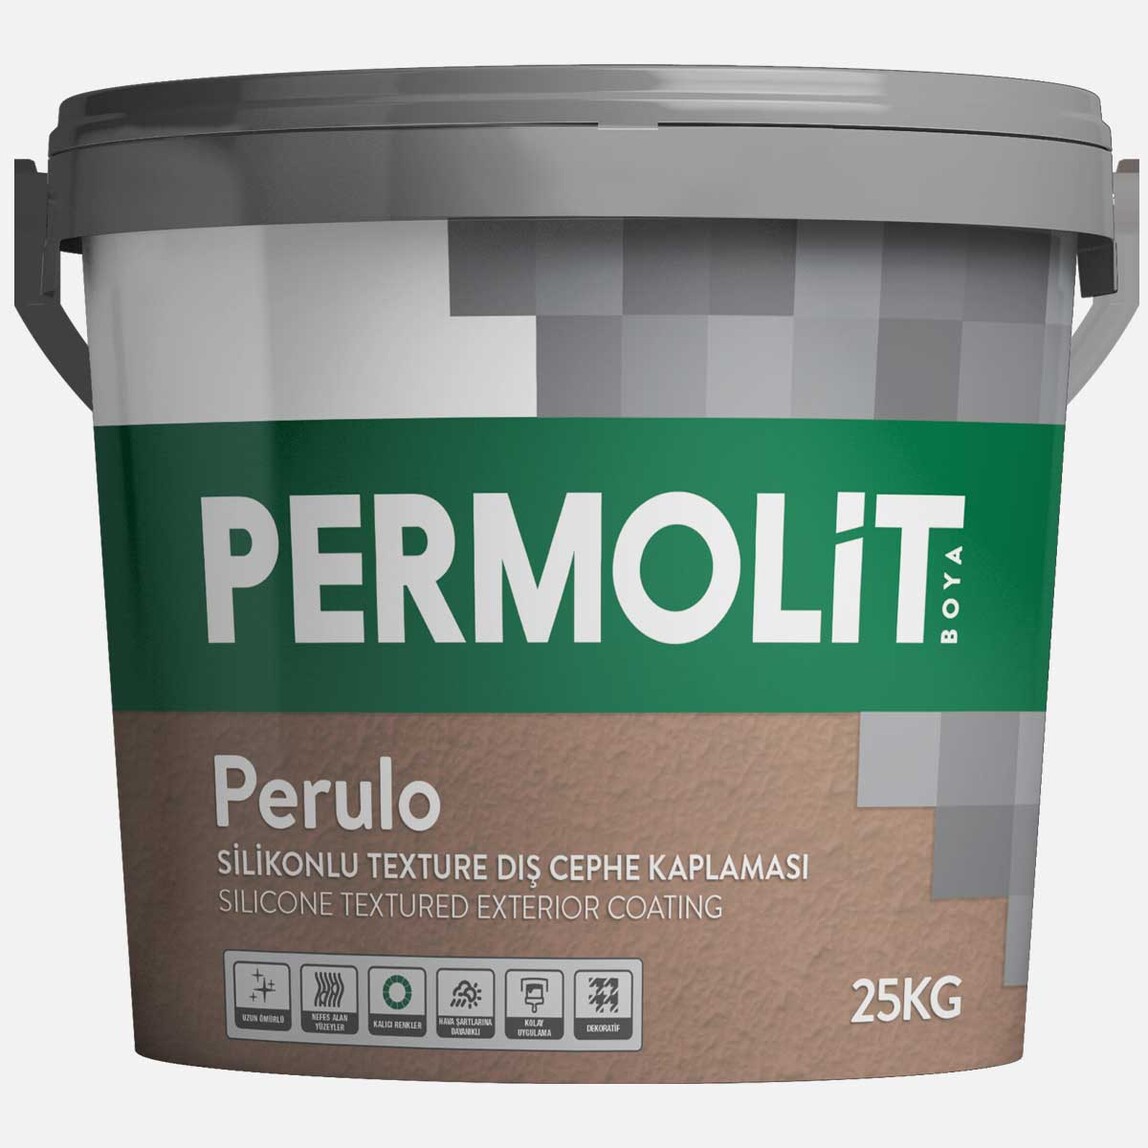    Permolit 25Kg Perulo Silikonlu Texture Tr-Baz Dış Cephe Kaplaması 